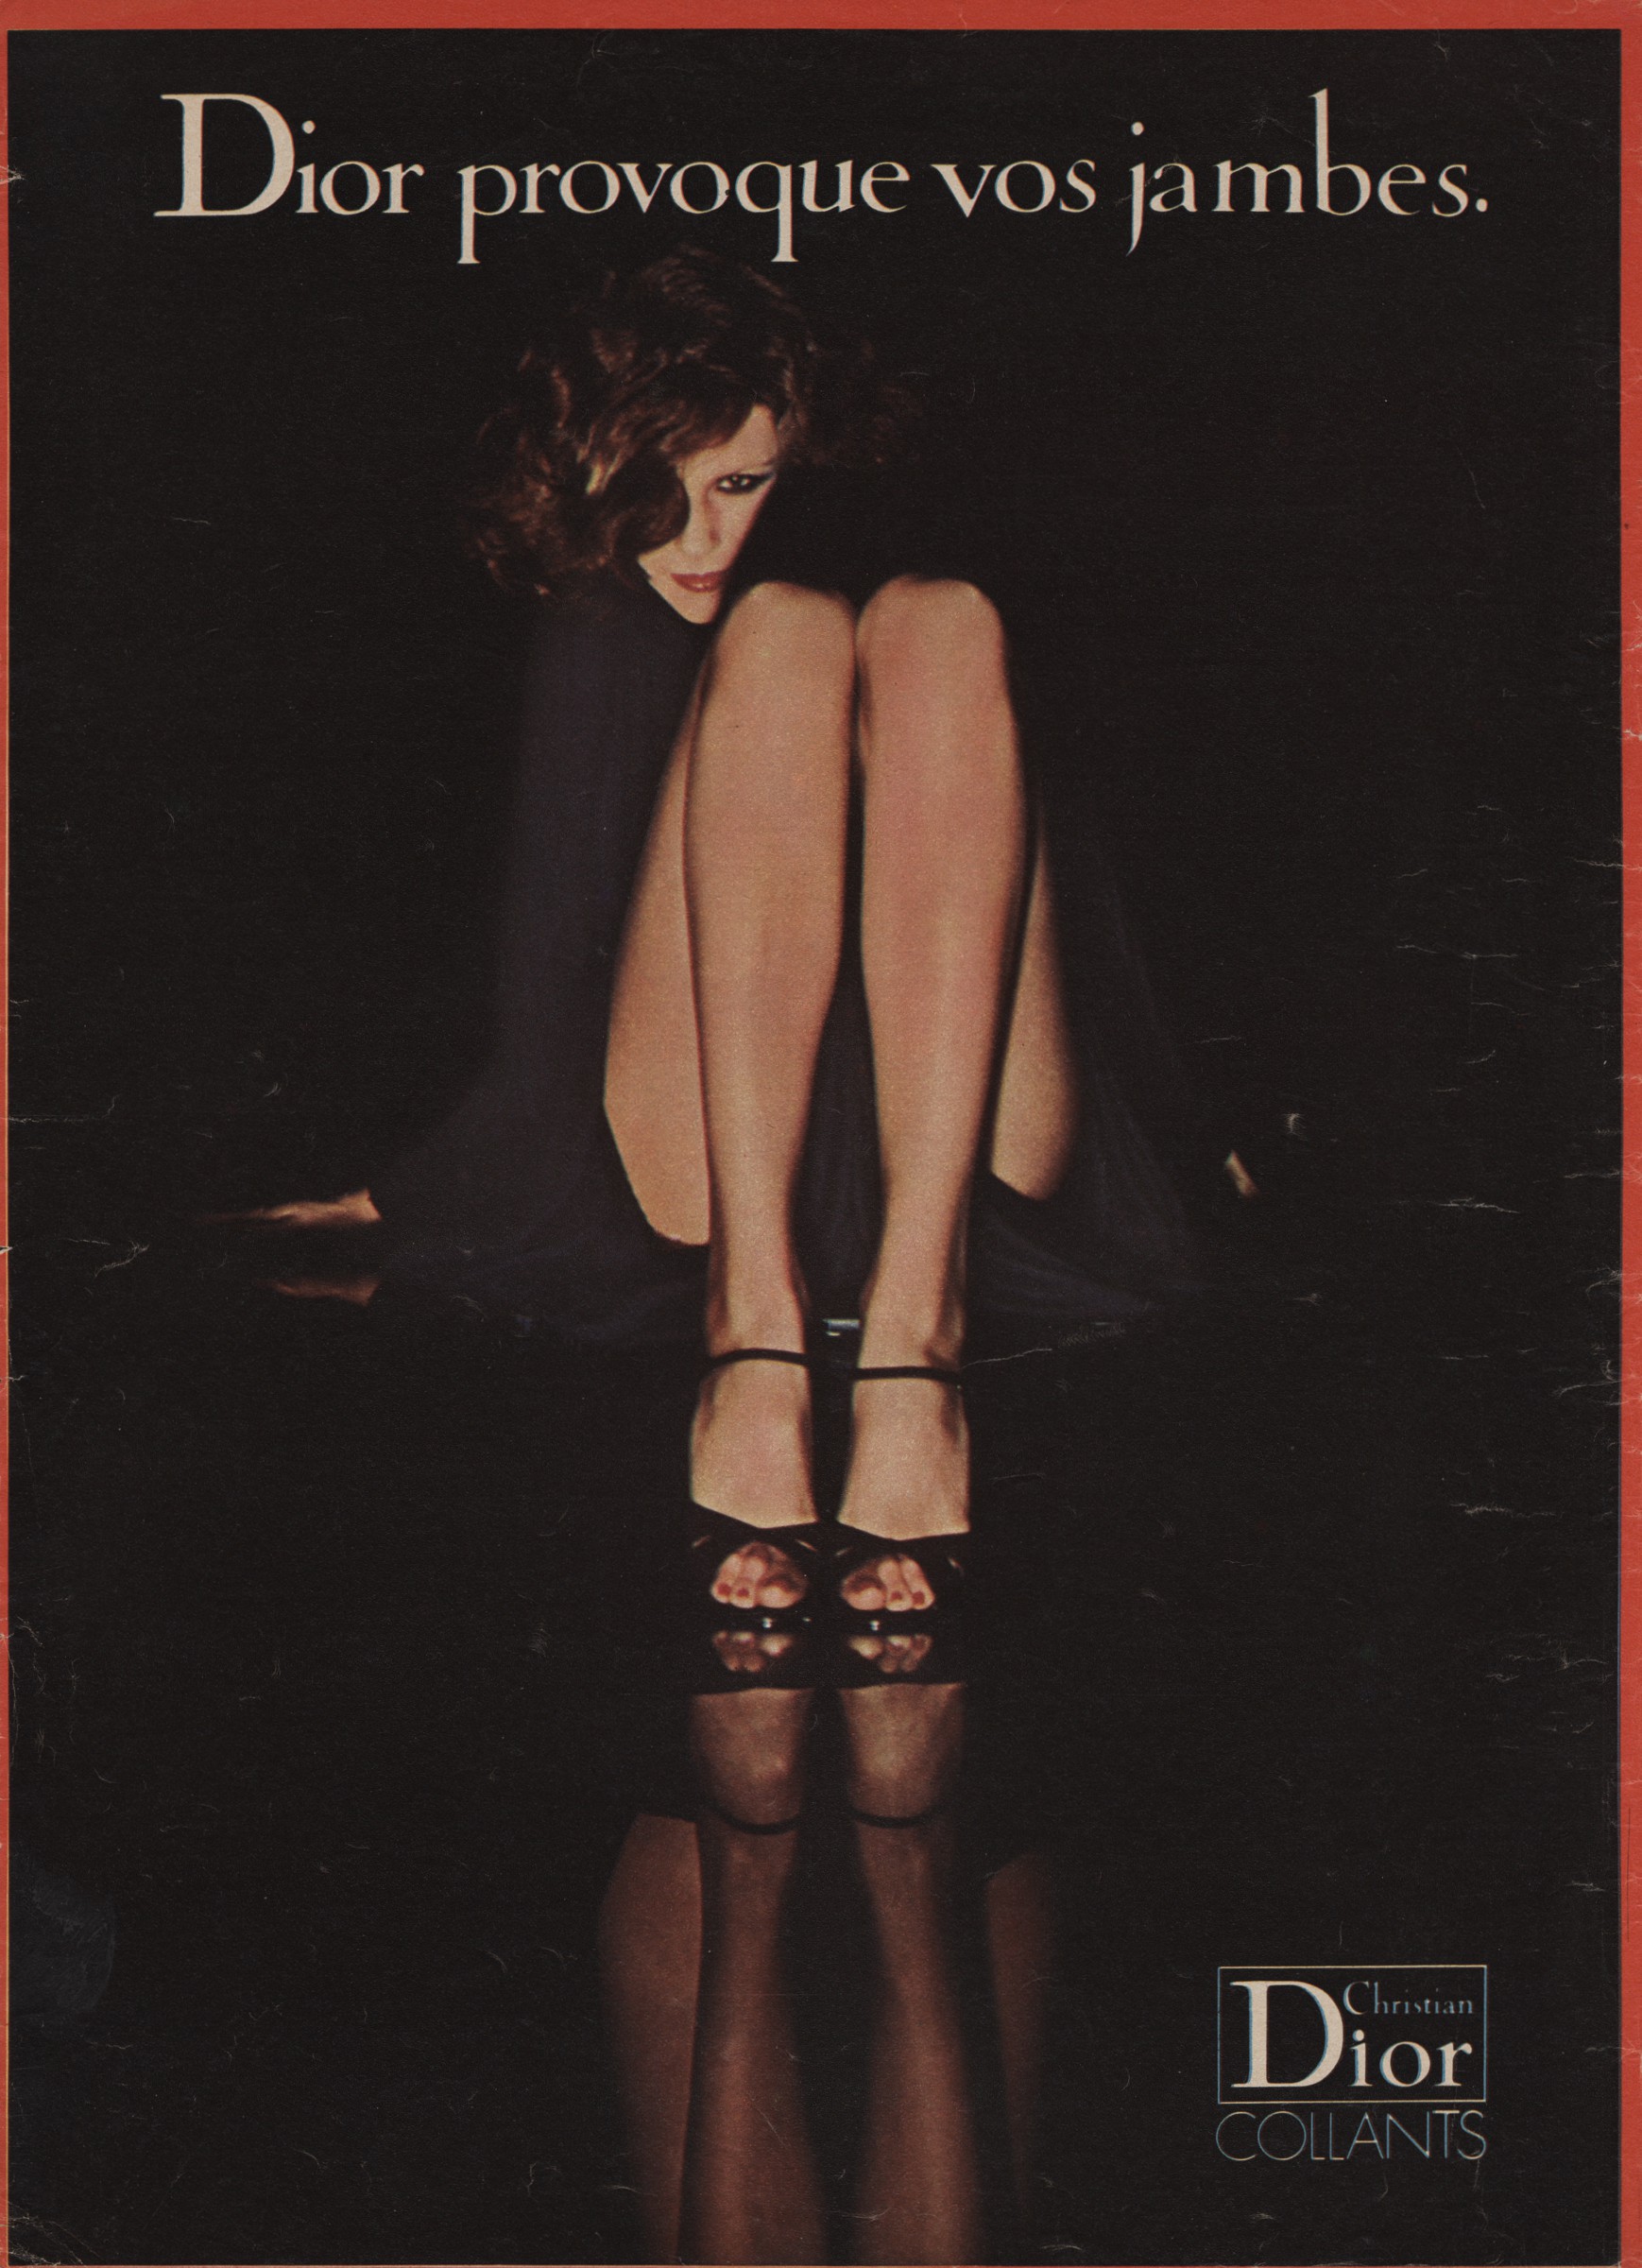 Christian Dior (Stockings Hosiery) 1952 — Advertisement